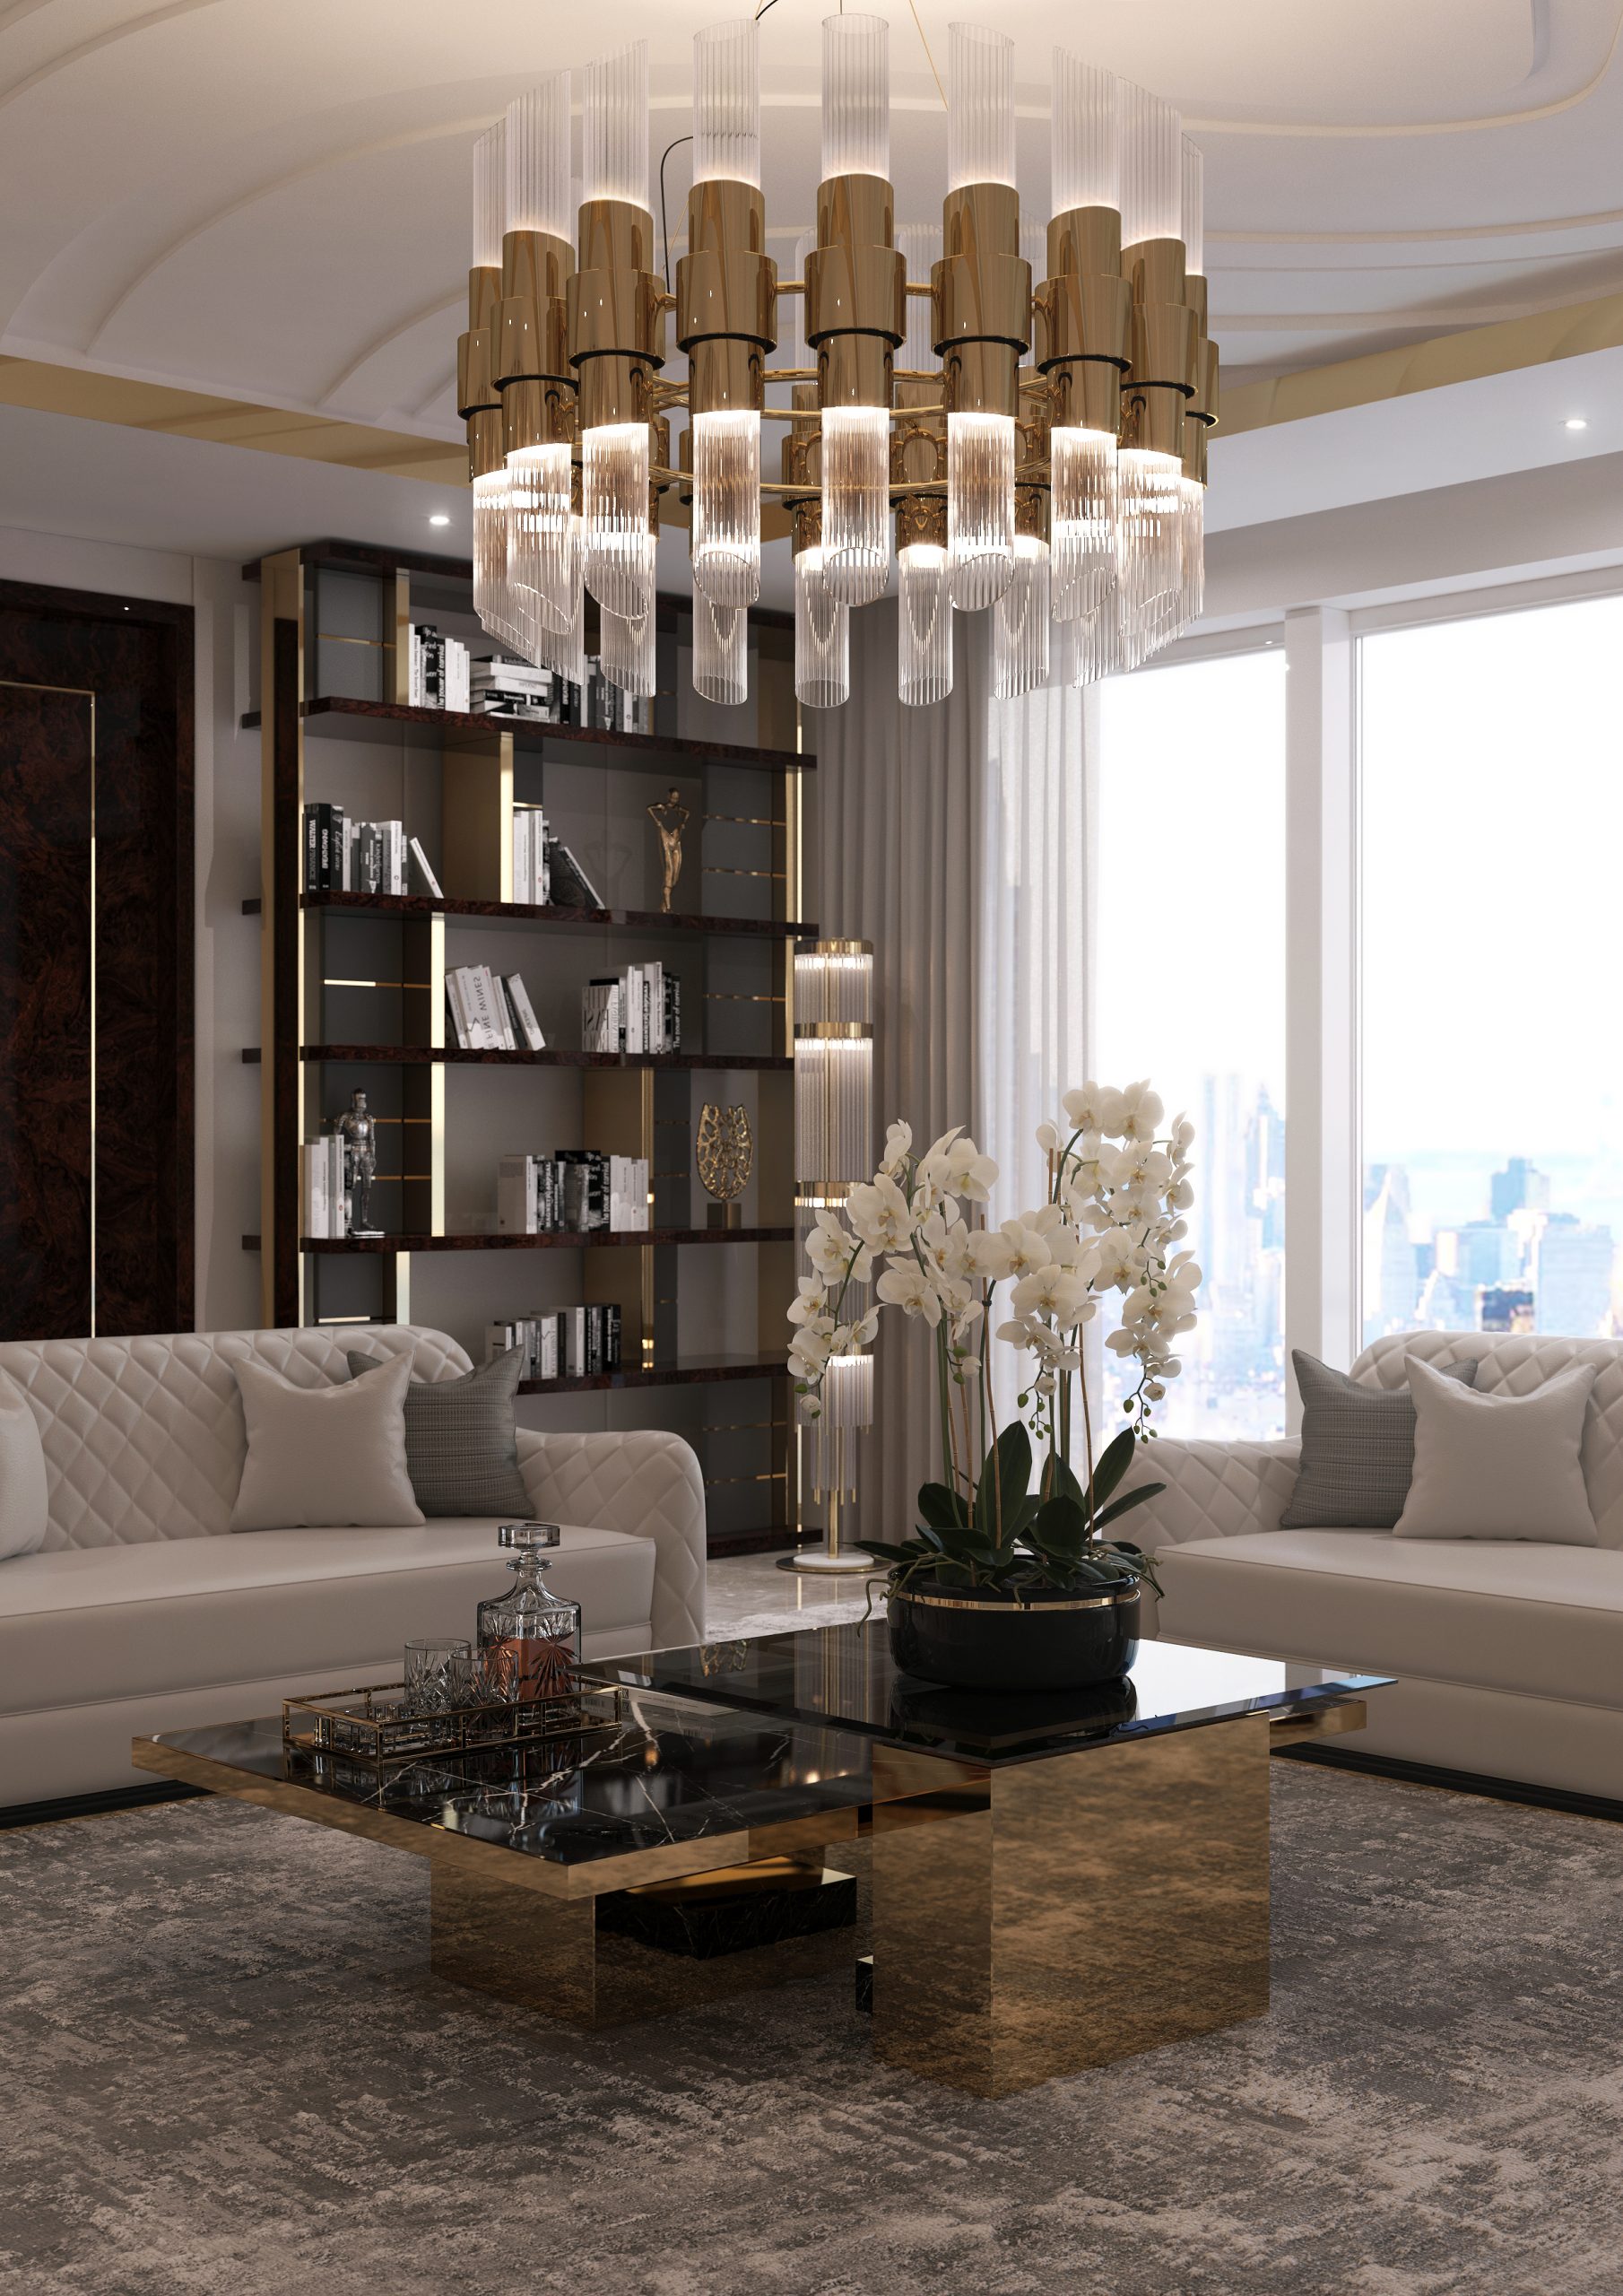 Living Room Decor Ideas: Fierceless, Timeless, Modern & Sophisticated